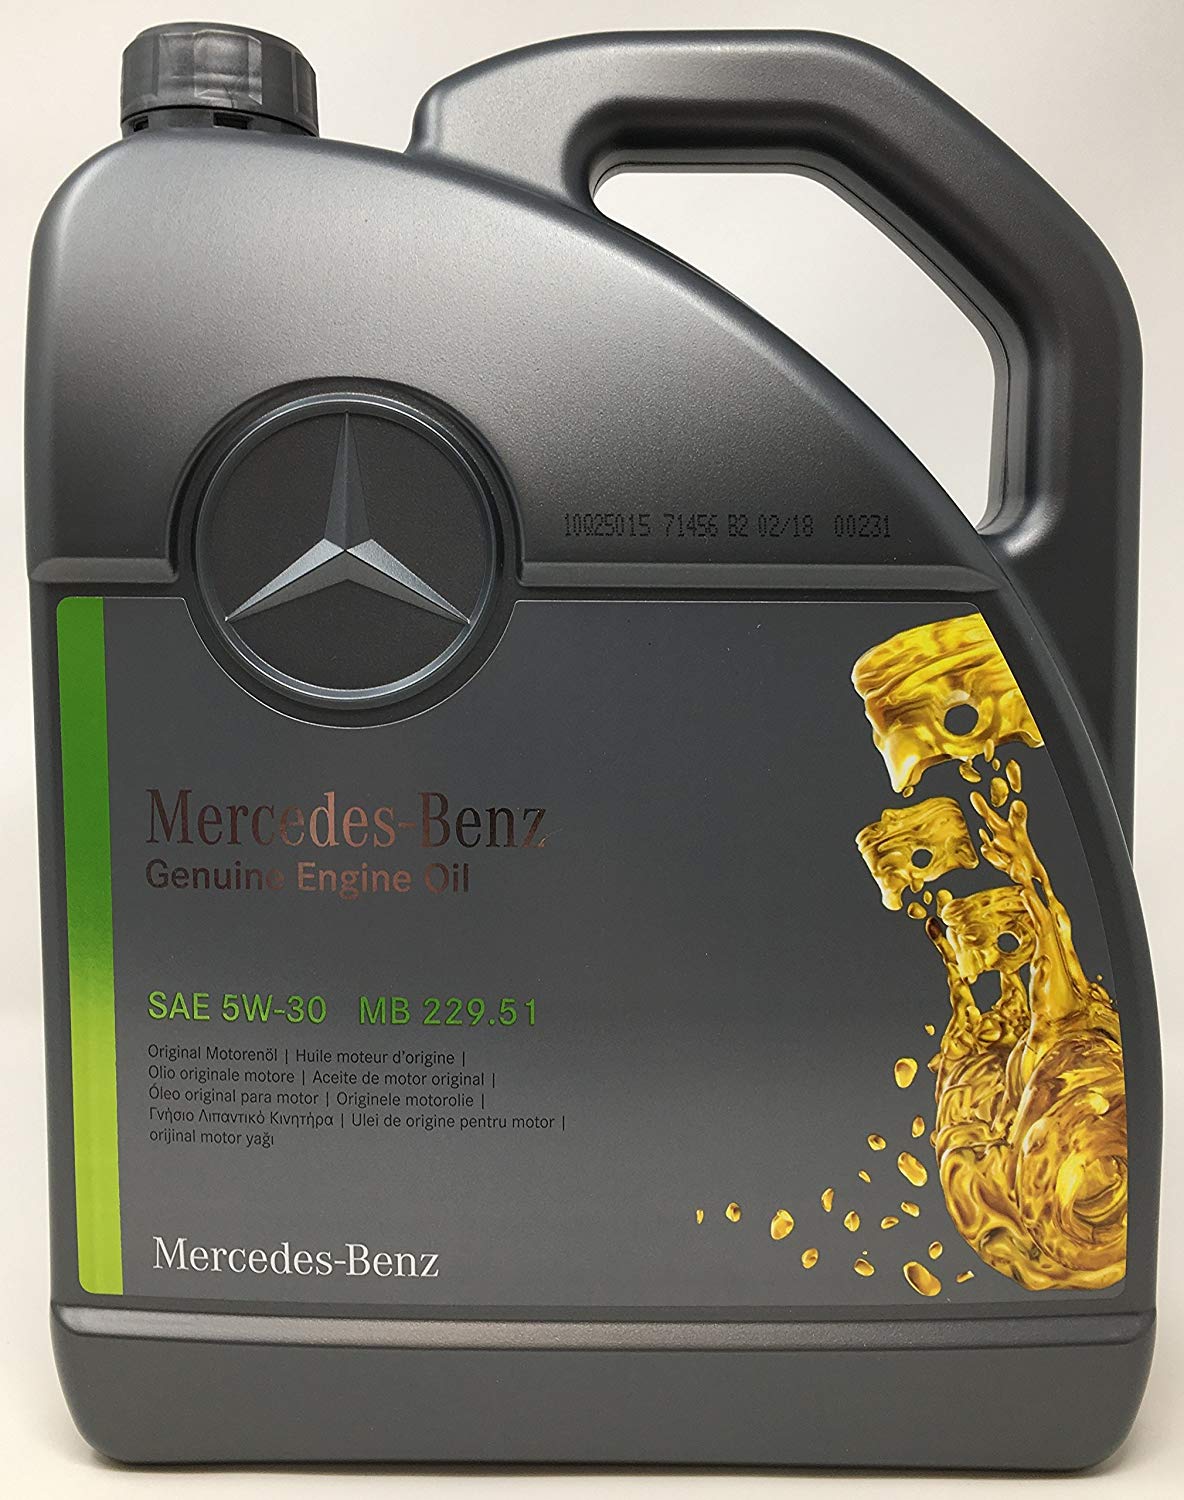 Mercedes A 000 989 97 01 BAA4 Engine oil Mercedes Genuine Engine Oil 5W-30, 5L A0009899701BAA4